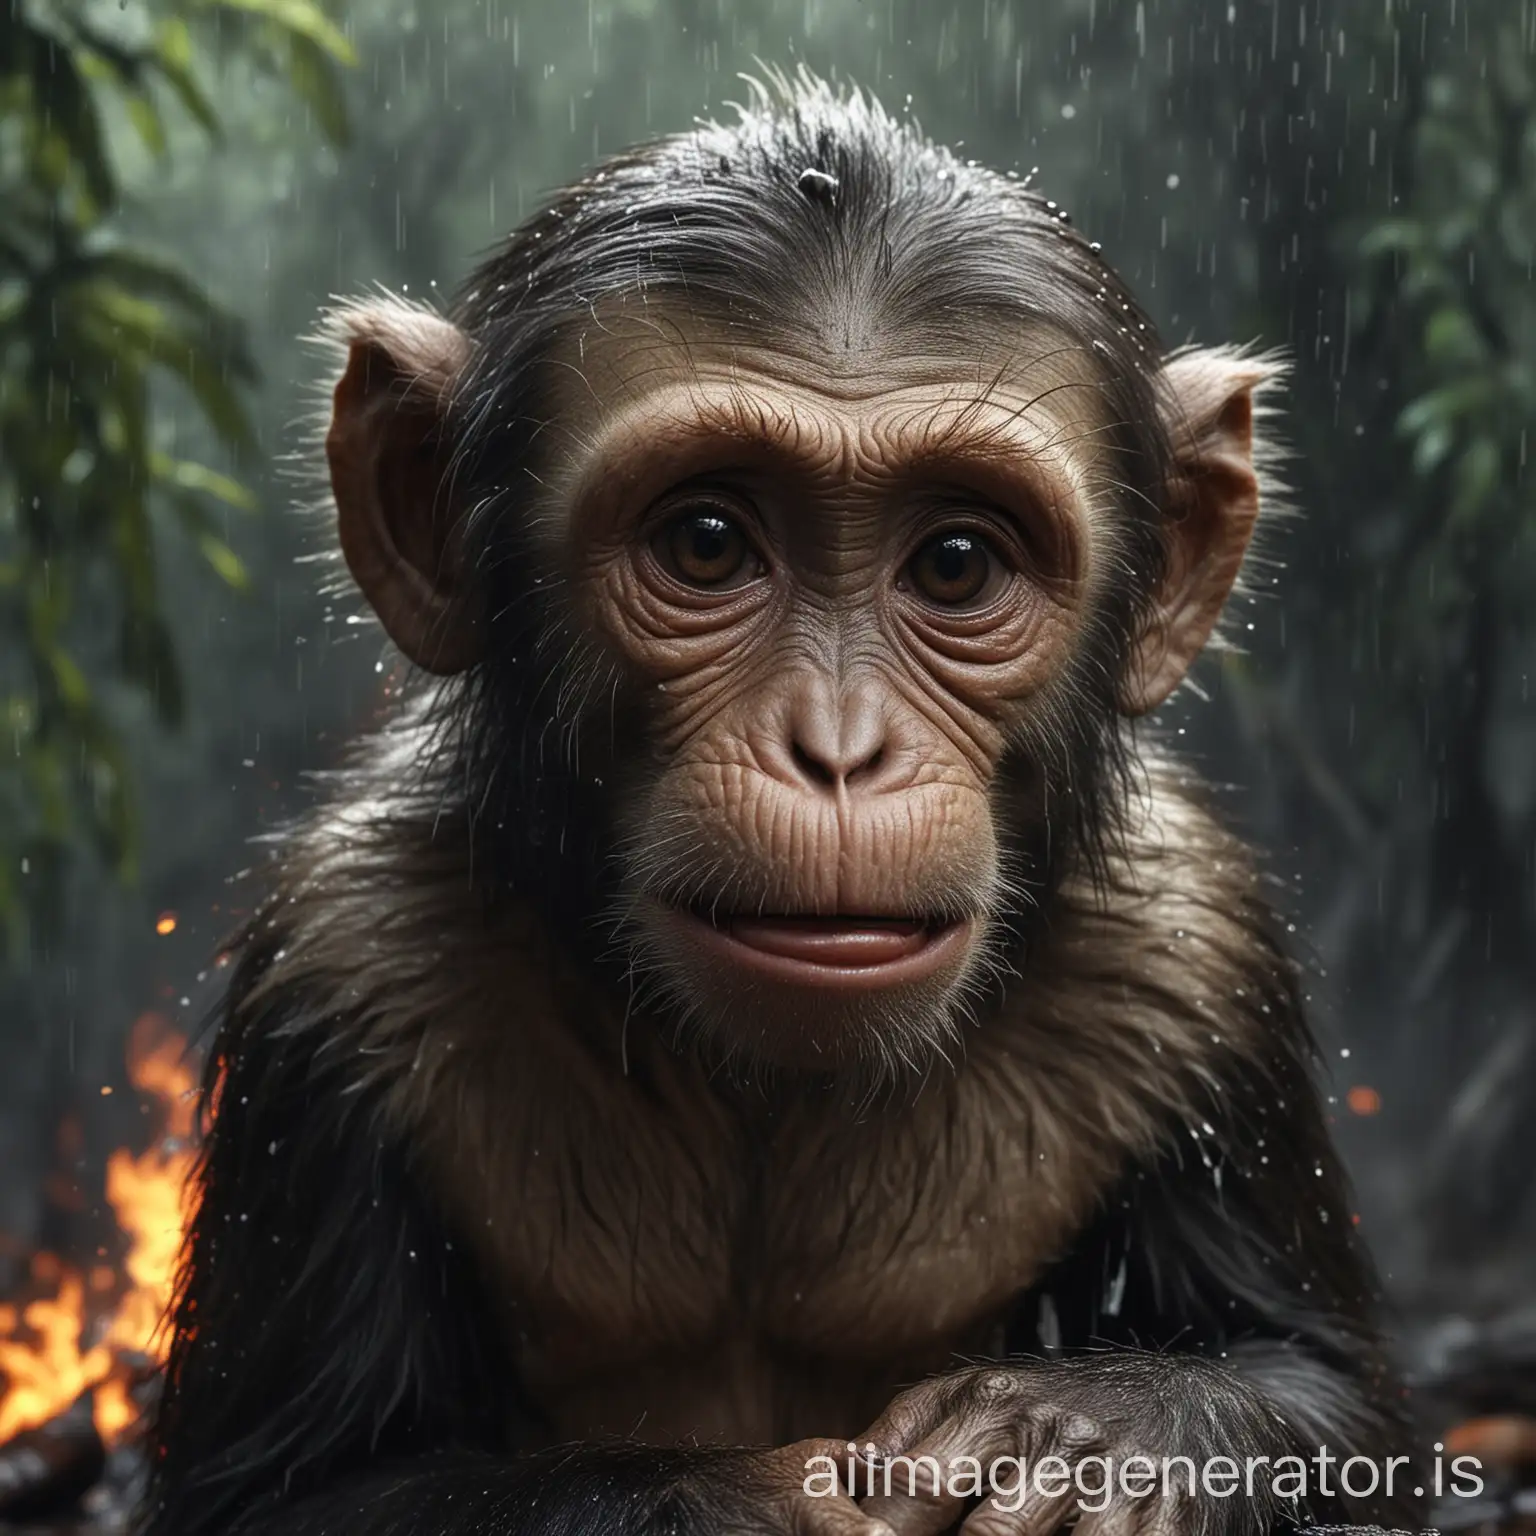 Distressed-Monkey-Amidst-Rainforest-Devastation-Emotional-Scene-in-HighQuality-3D